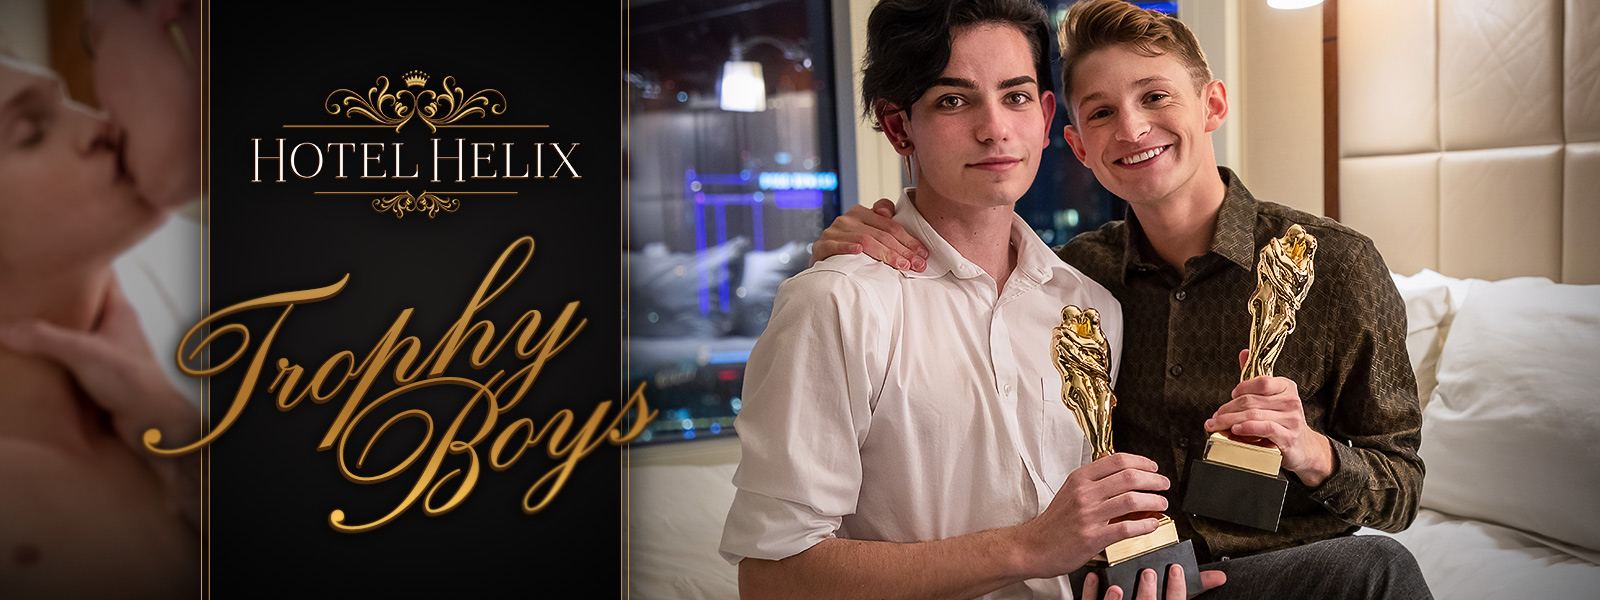 Hotel Helix: Trophy Boys